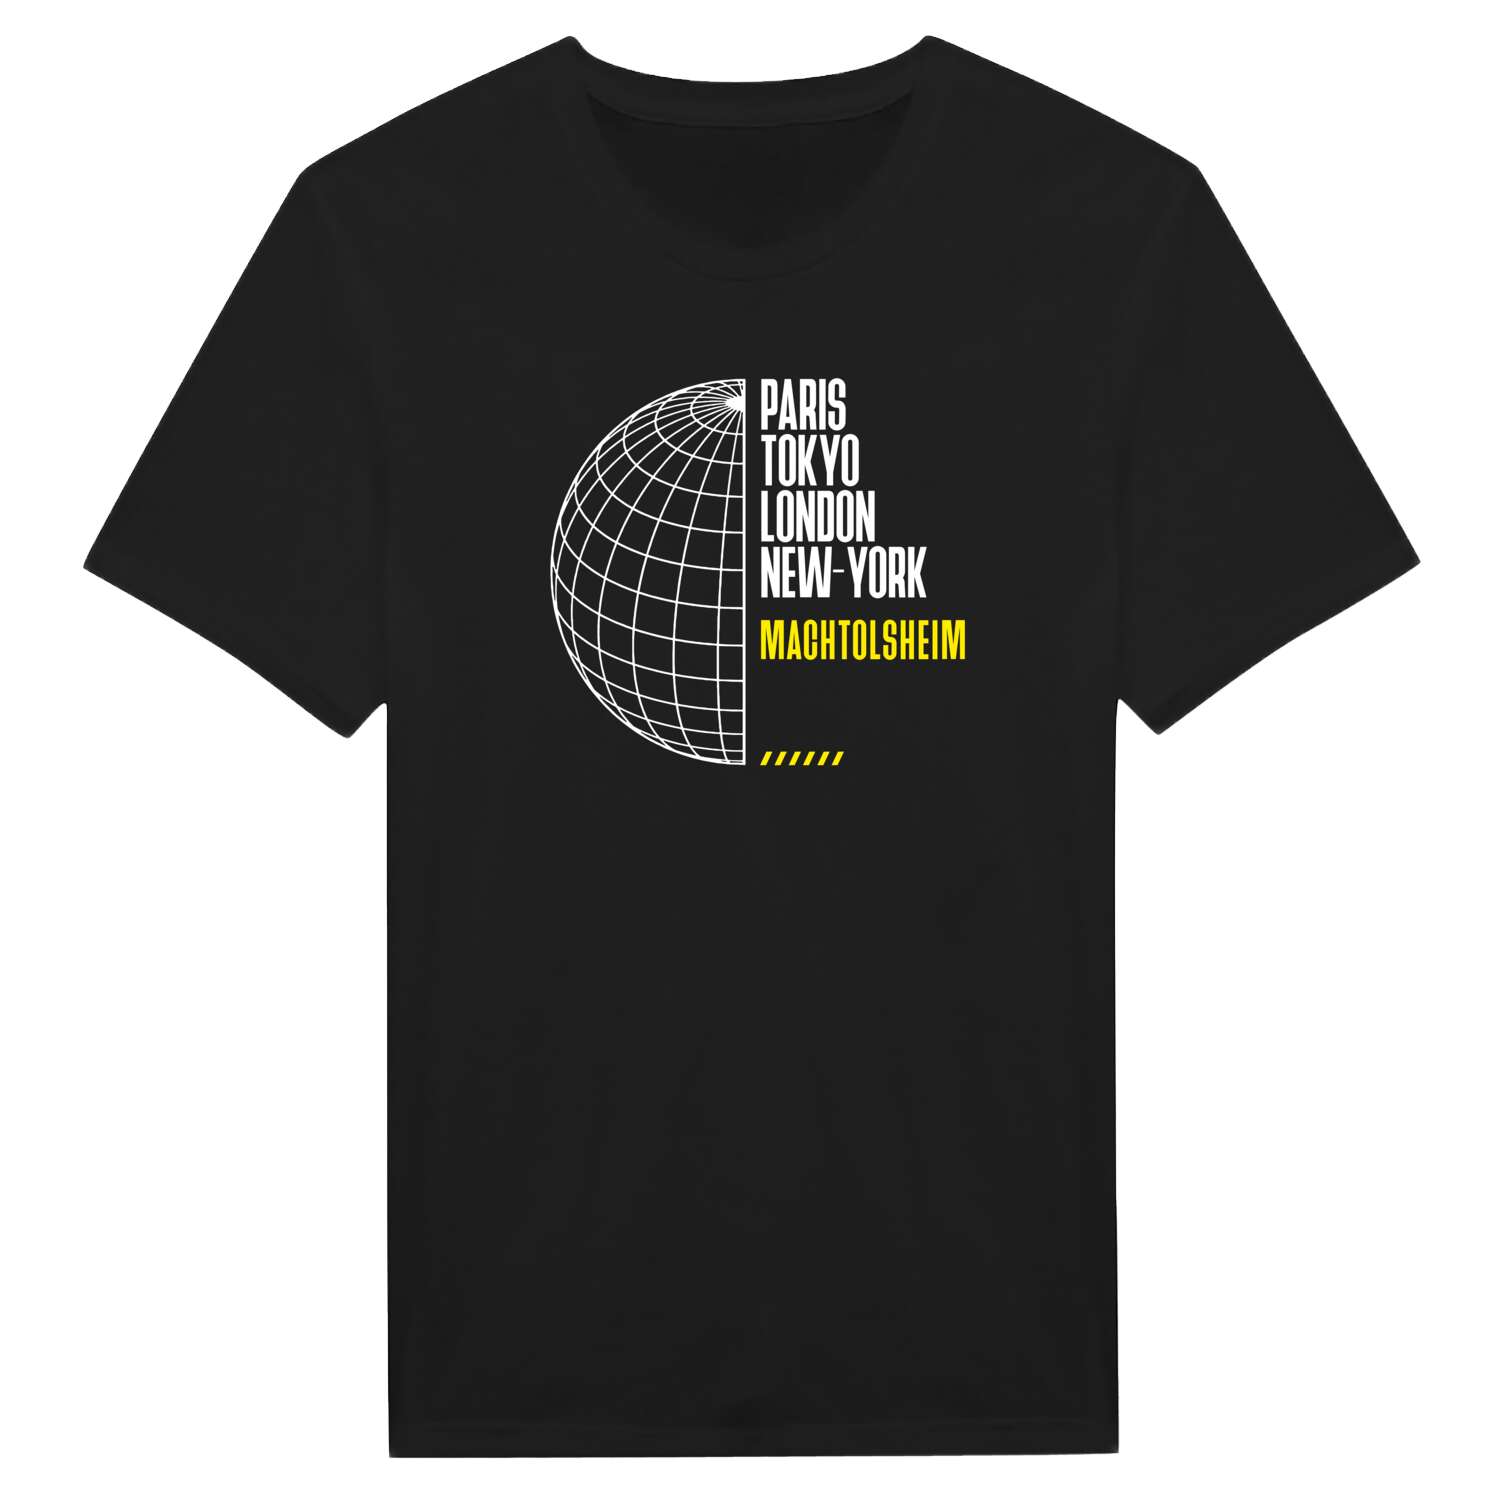 Machtolsheim T-Shirt »Paris Tokyo London«